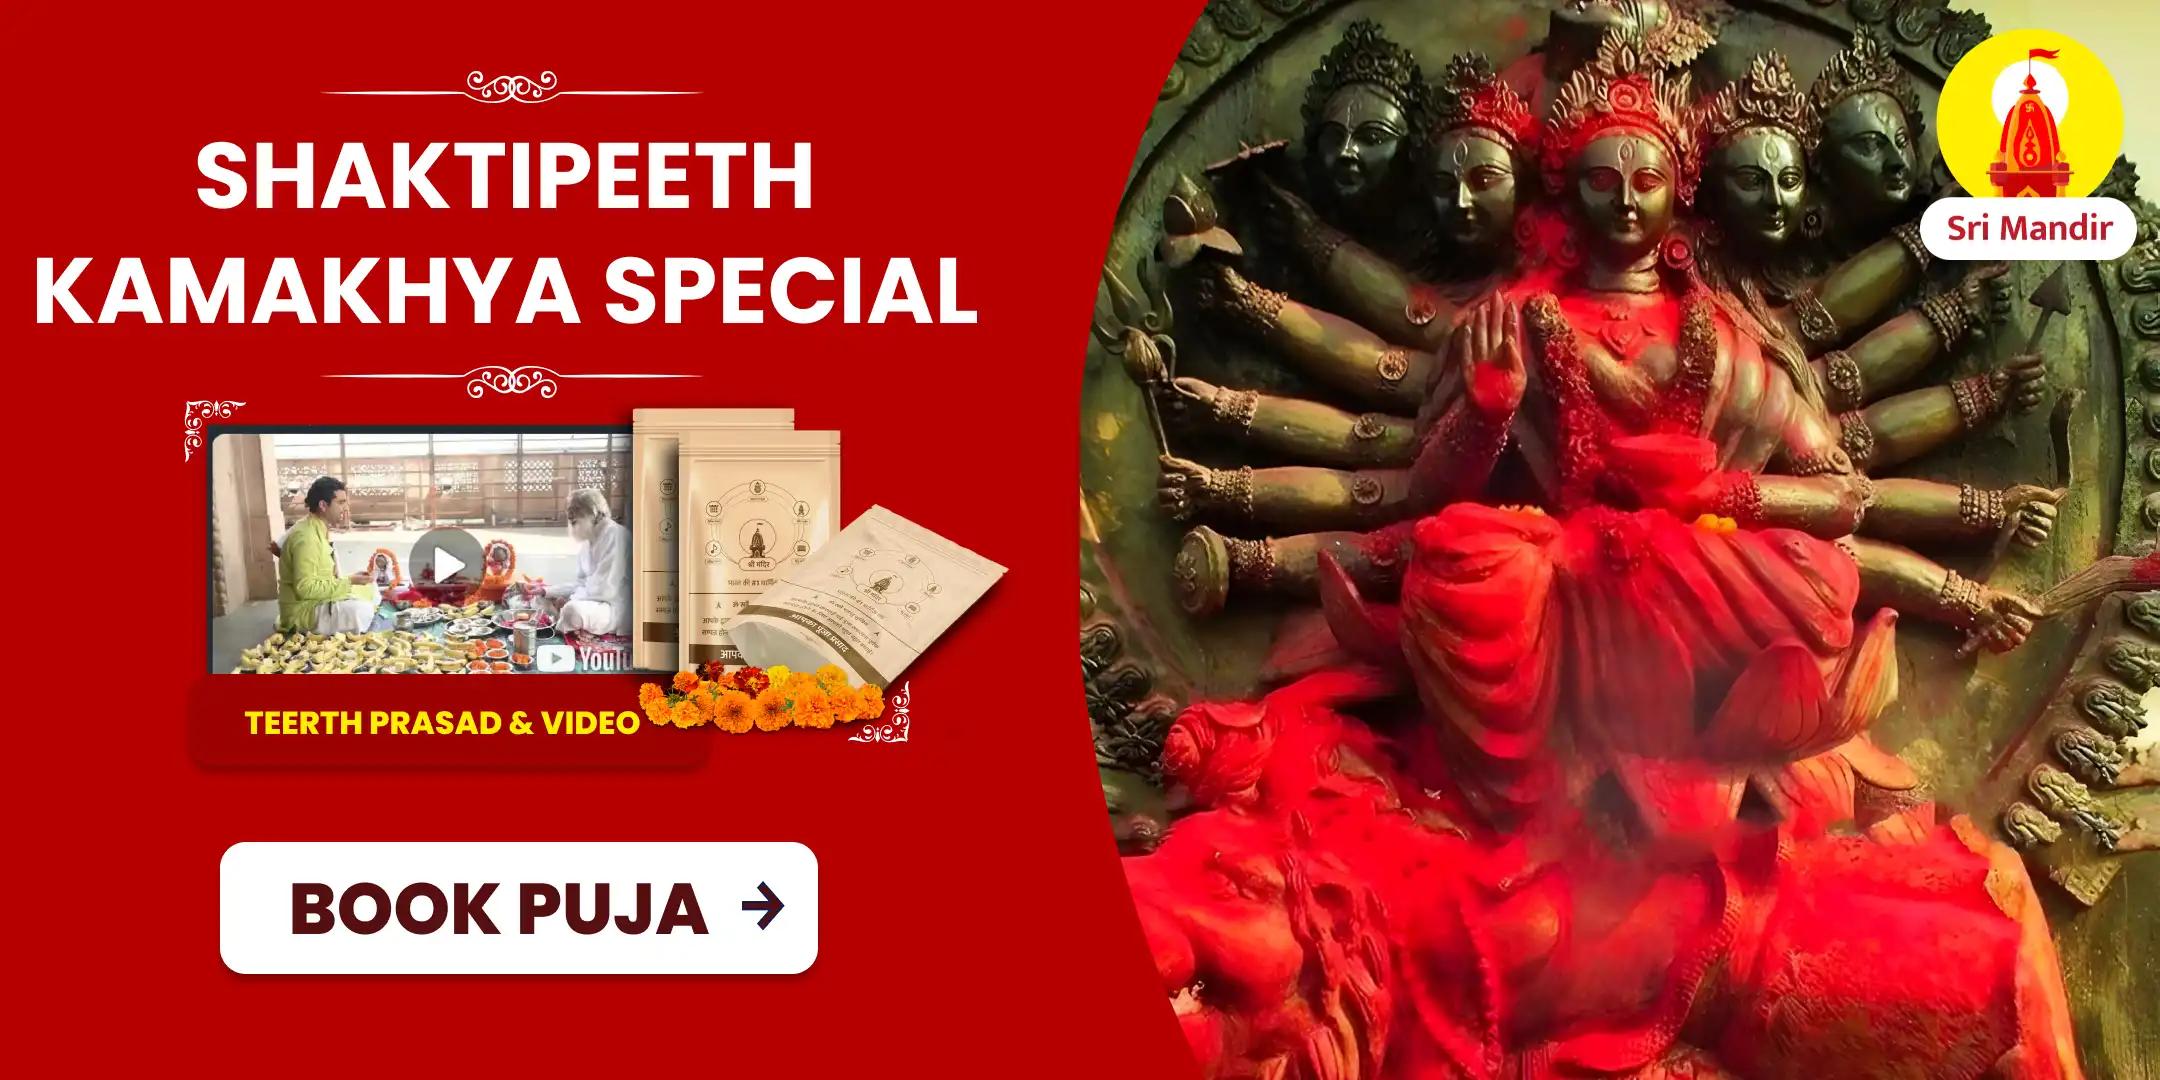 Shaktipeeth Saptami Special Maa Kamakhya Siddhi Yagya For Attaining Mental and Physical Strength (Shakti)